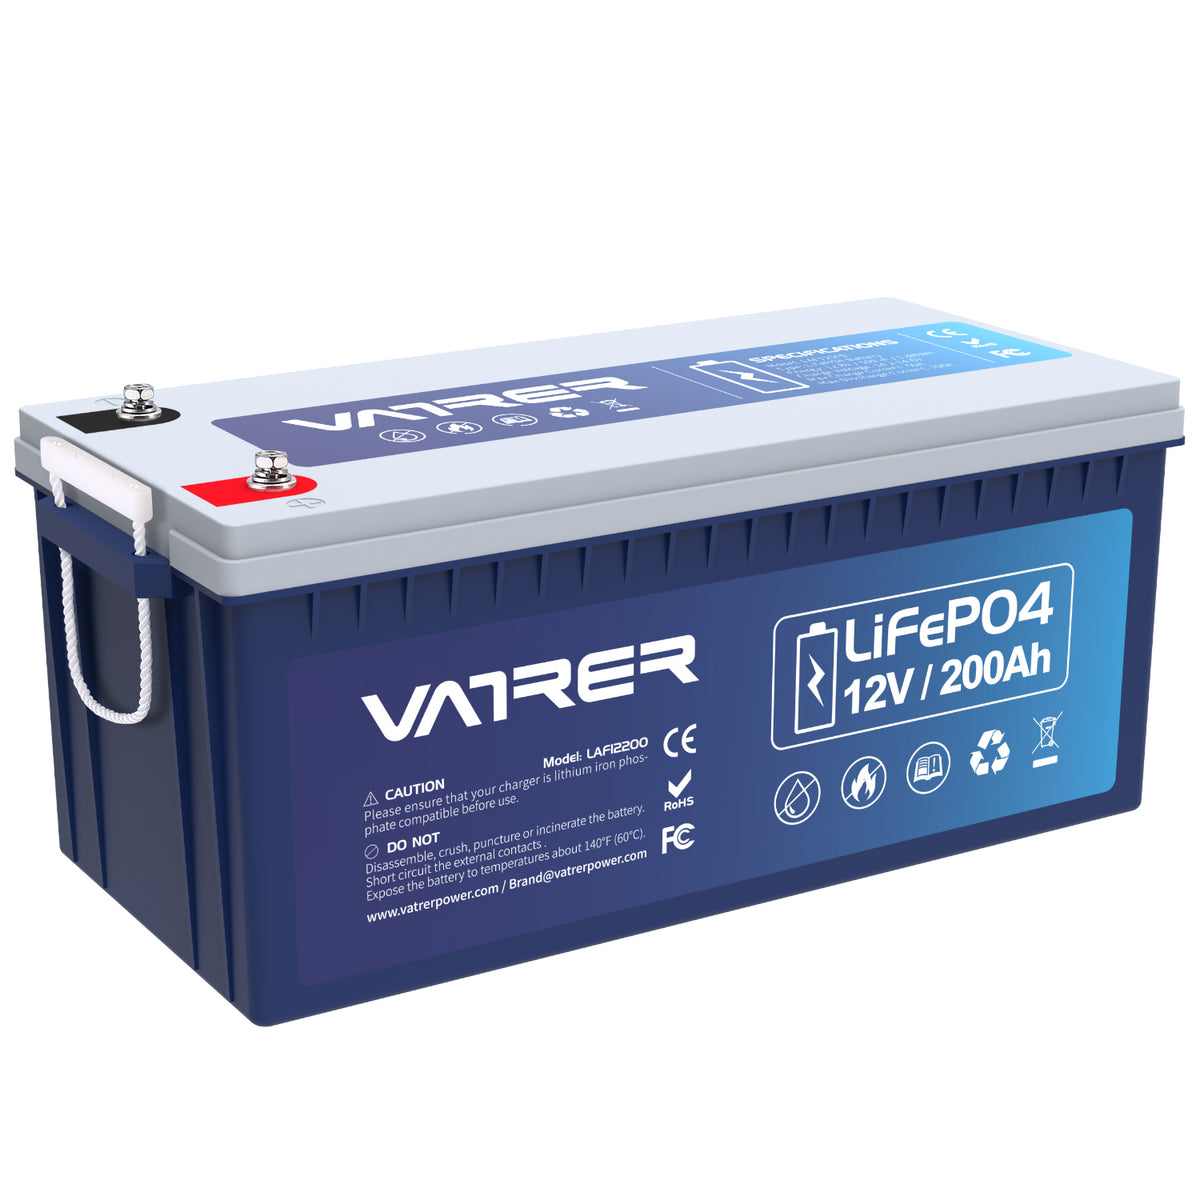 Vatrer 12V 200Ah 100A BMS Low Temp Cutoff LiFePO4 Lithium Battery